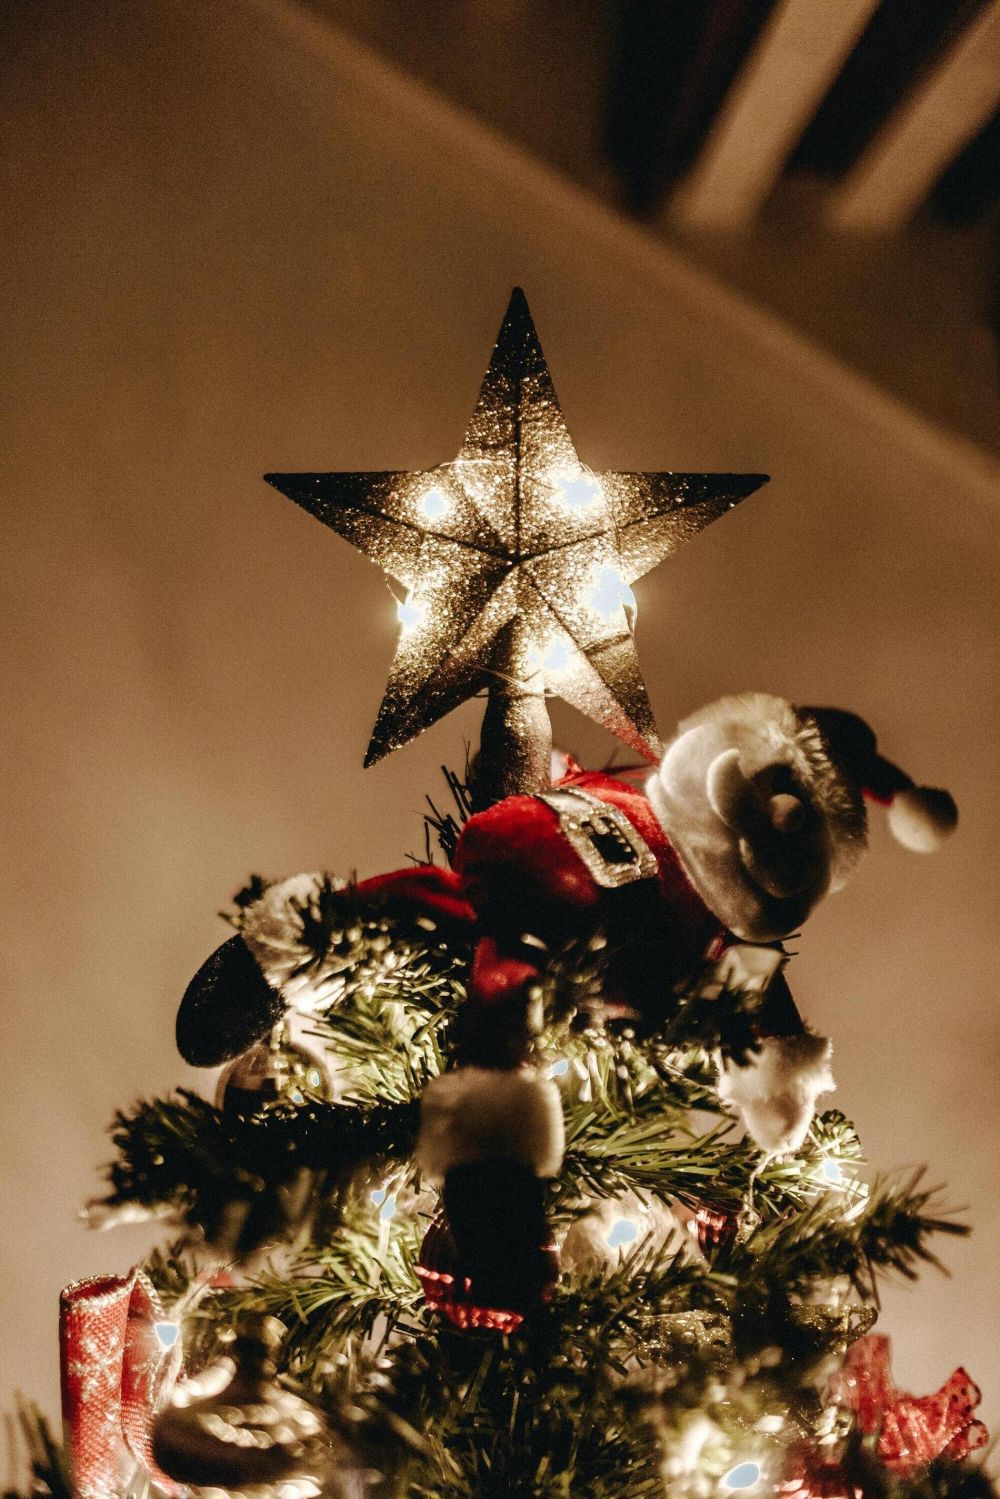 7 Rekomendasi Hiasan Natal yang Dapat Mempercantik Rumah Kamu, Sweet!